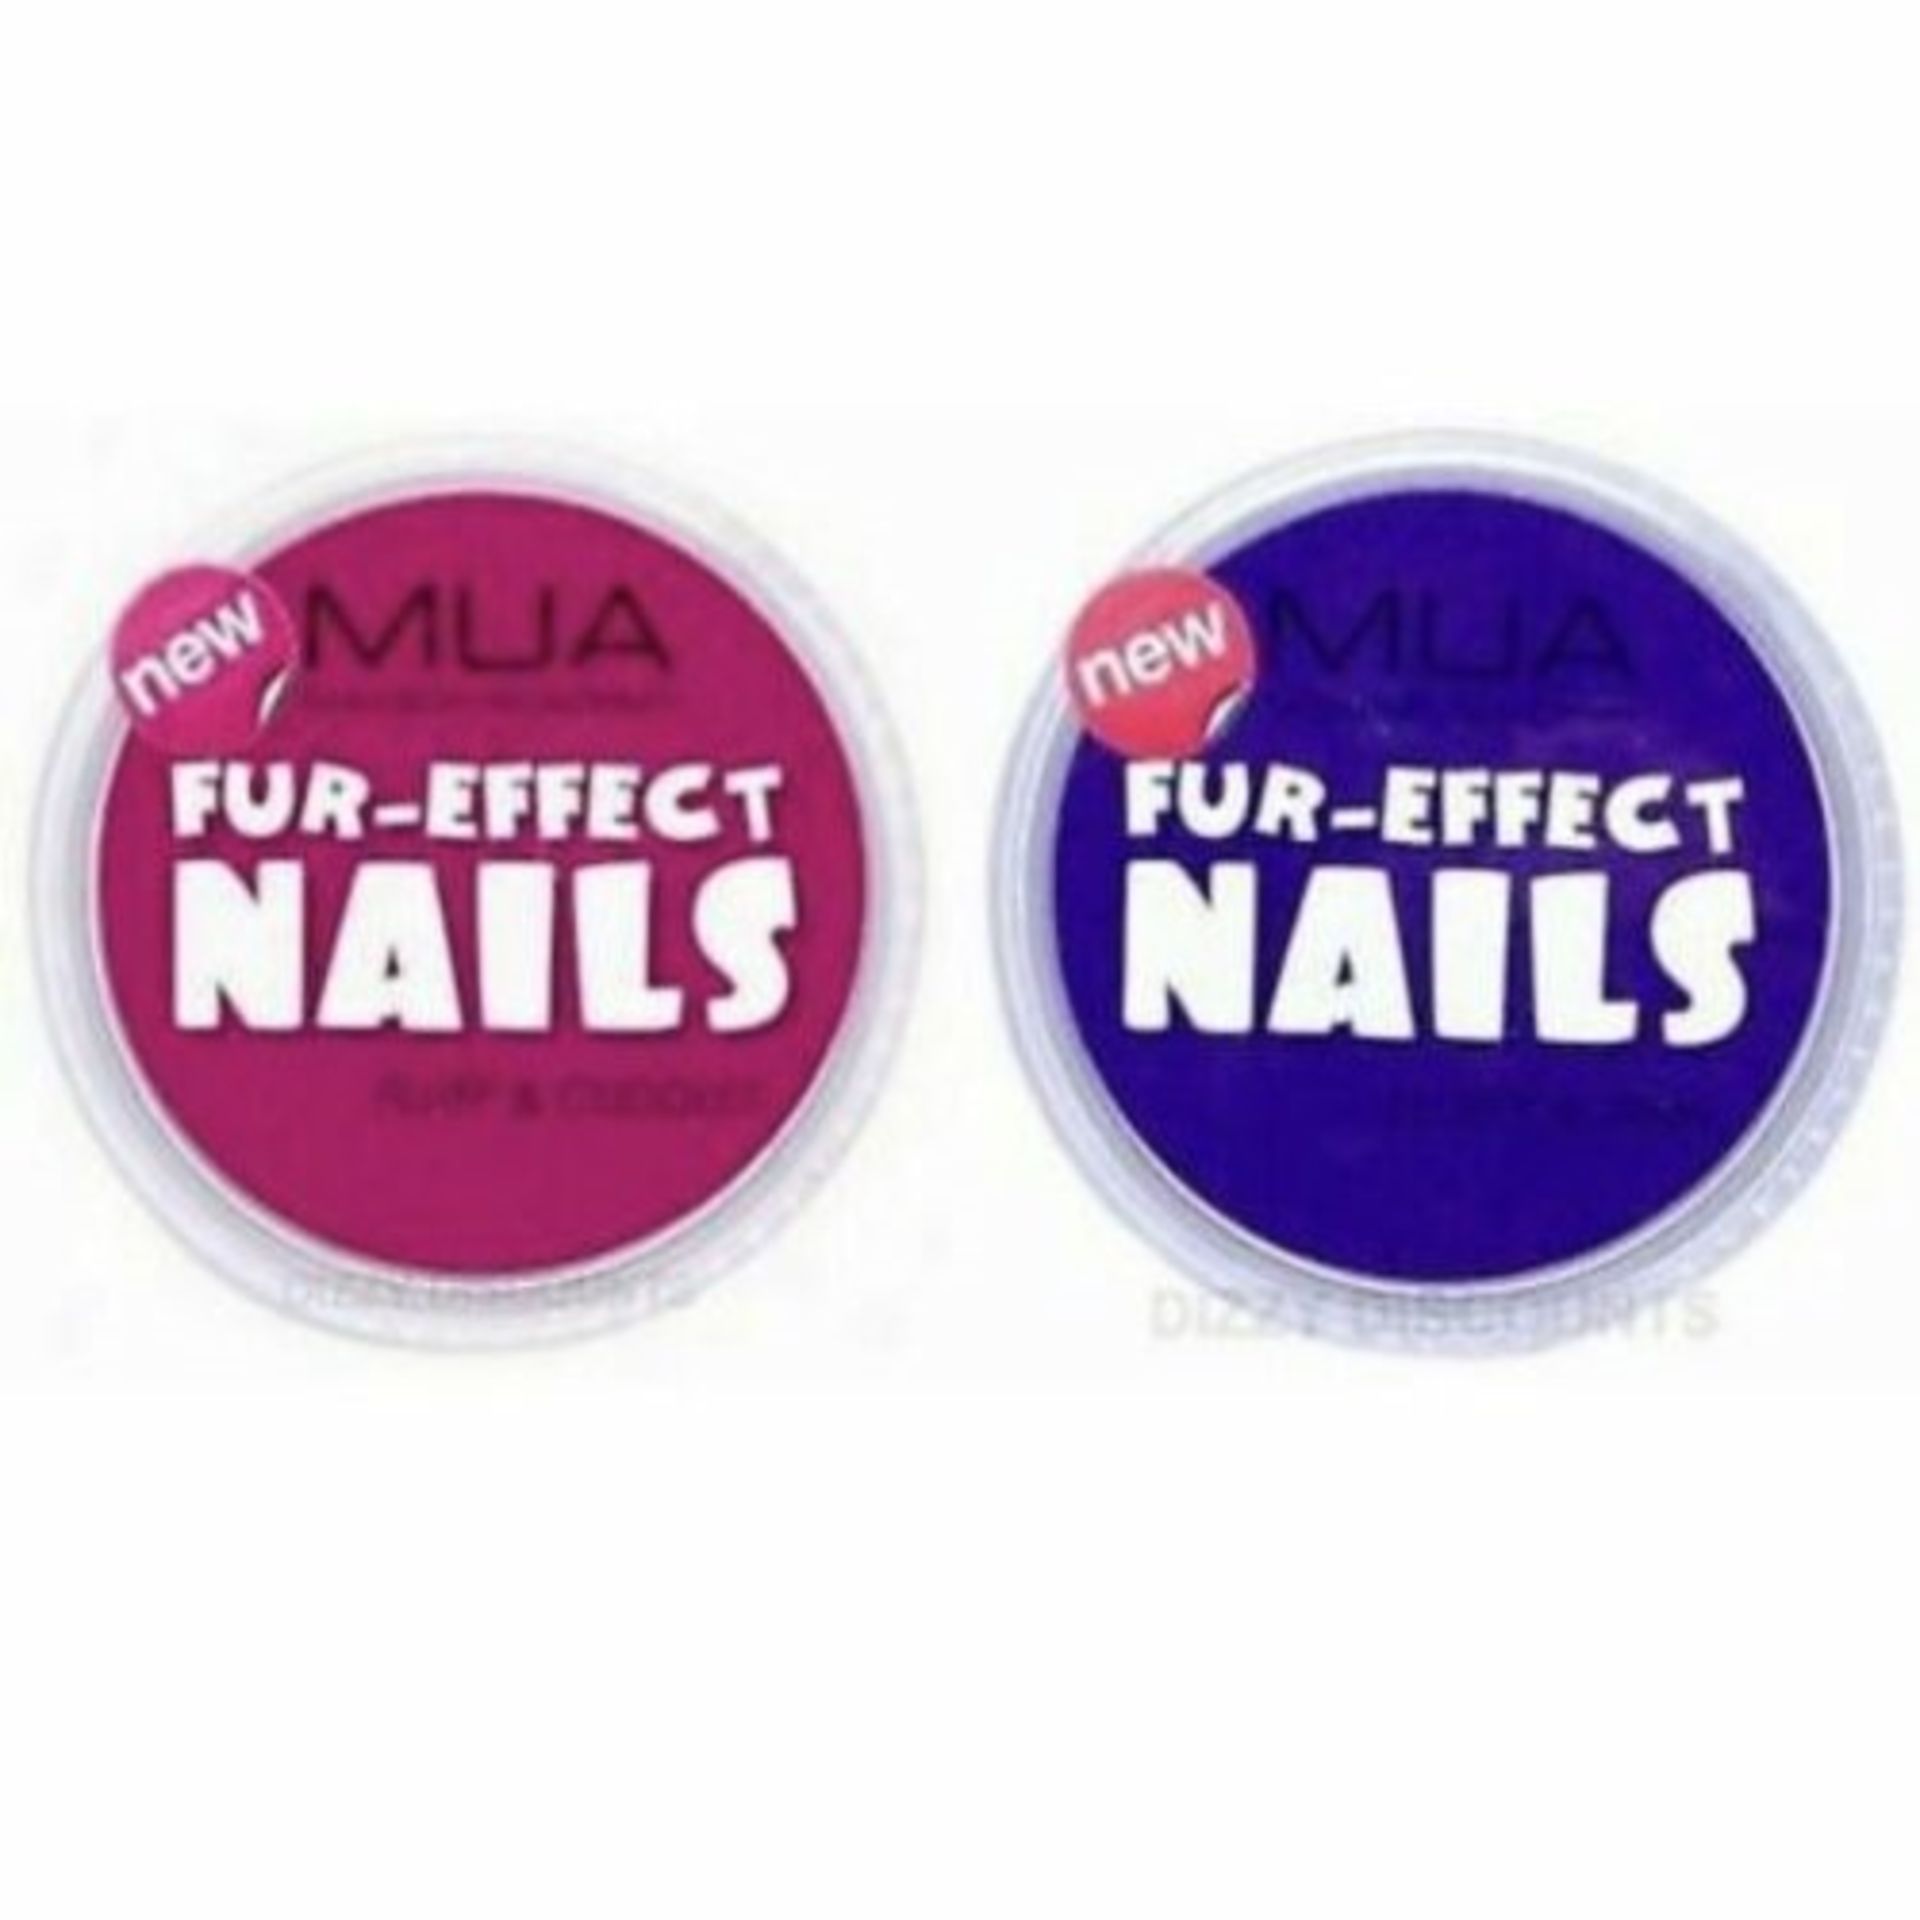 24 x Make Up Acadamy Fur Effect Nails Boo Fluff - RRP £4.50 Each